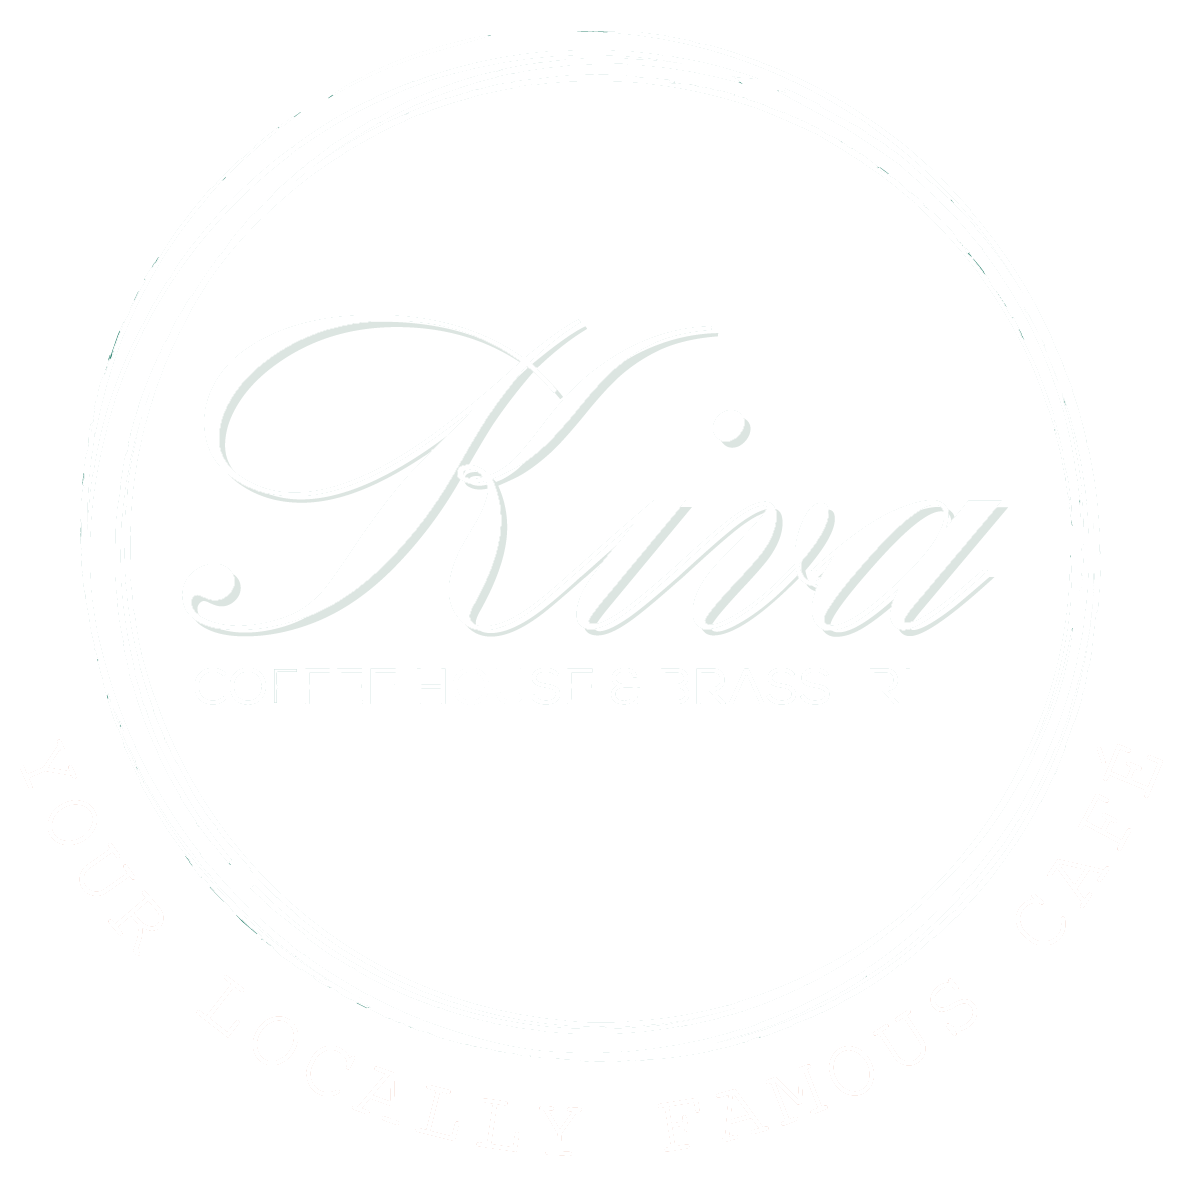 Kiva Coffee House